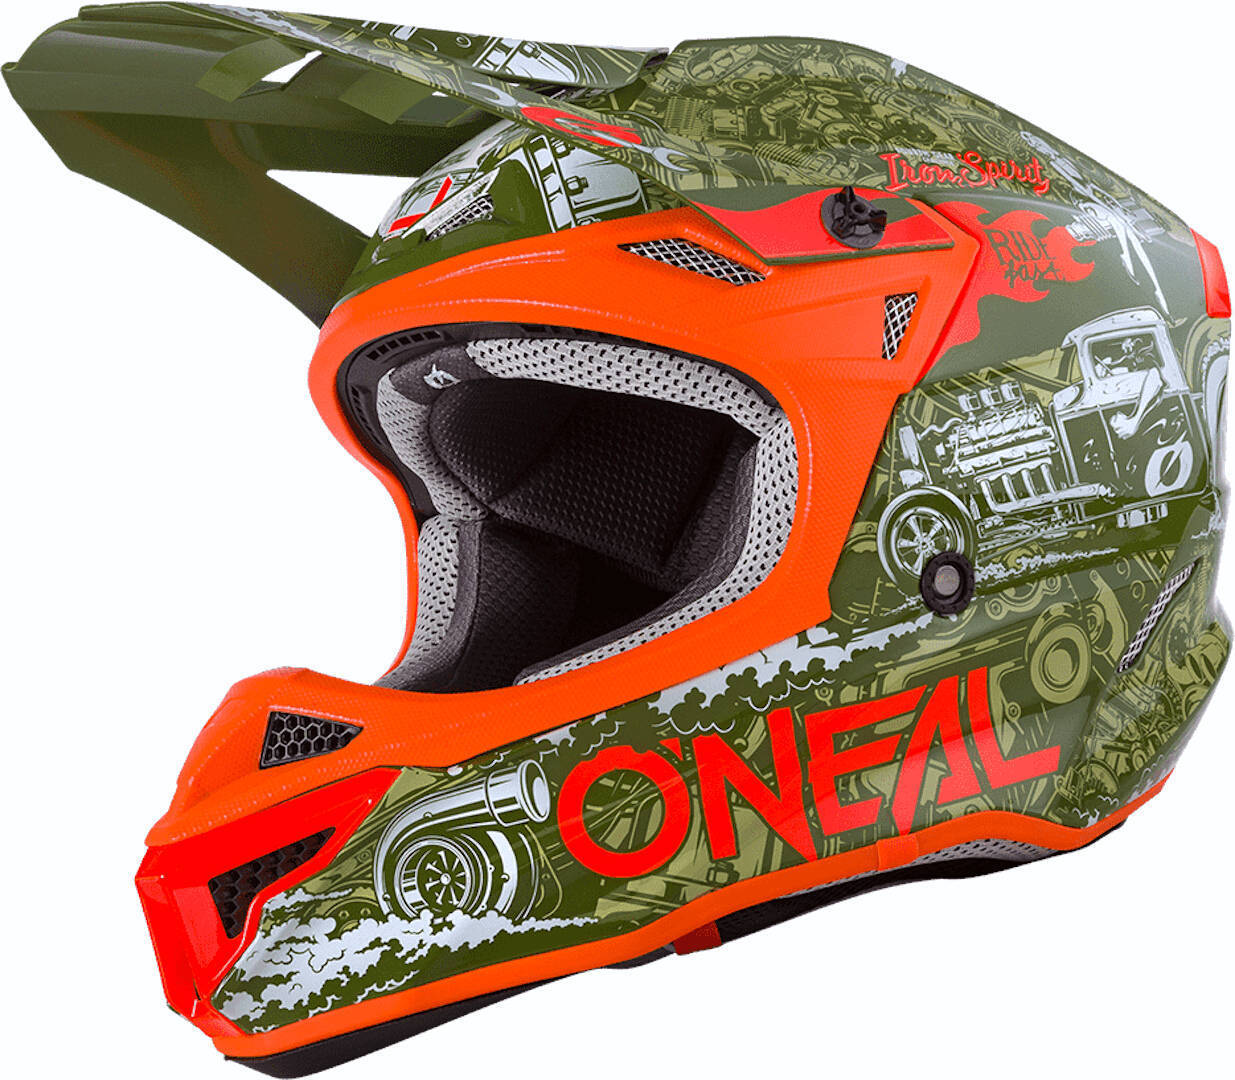 Oneal 5Series Polyacrylite HR Motocross Helm, grün, Größe M, grün, Größe M